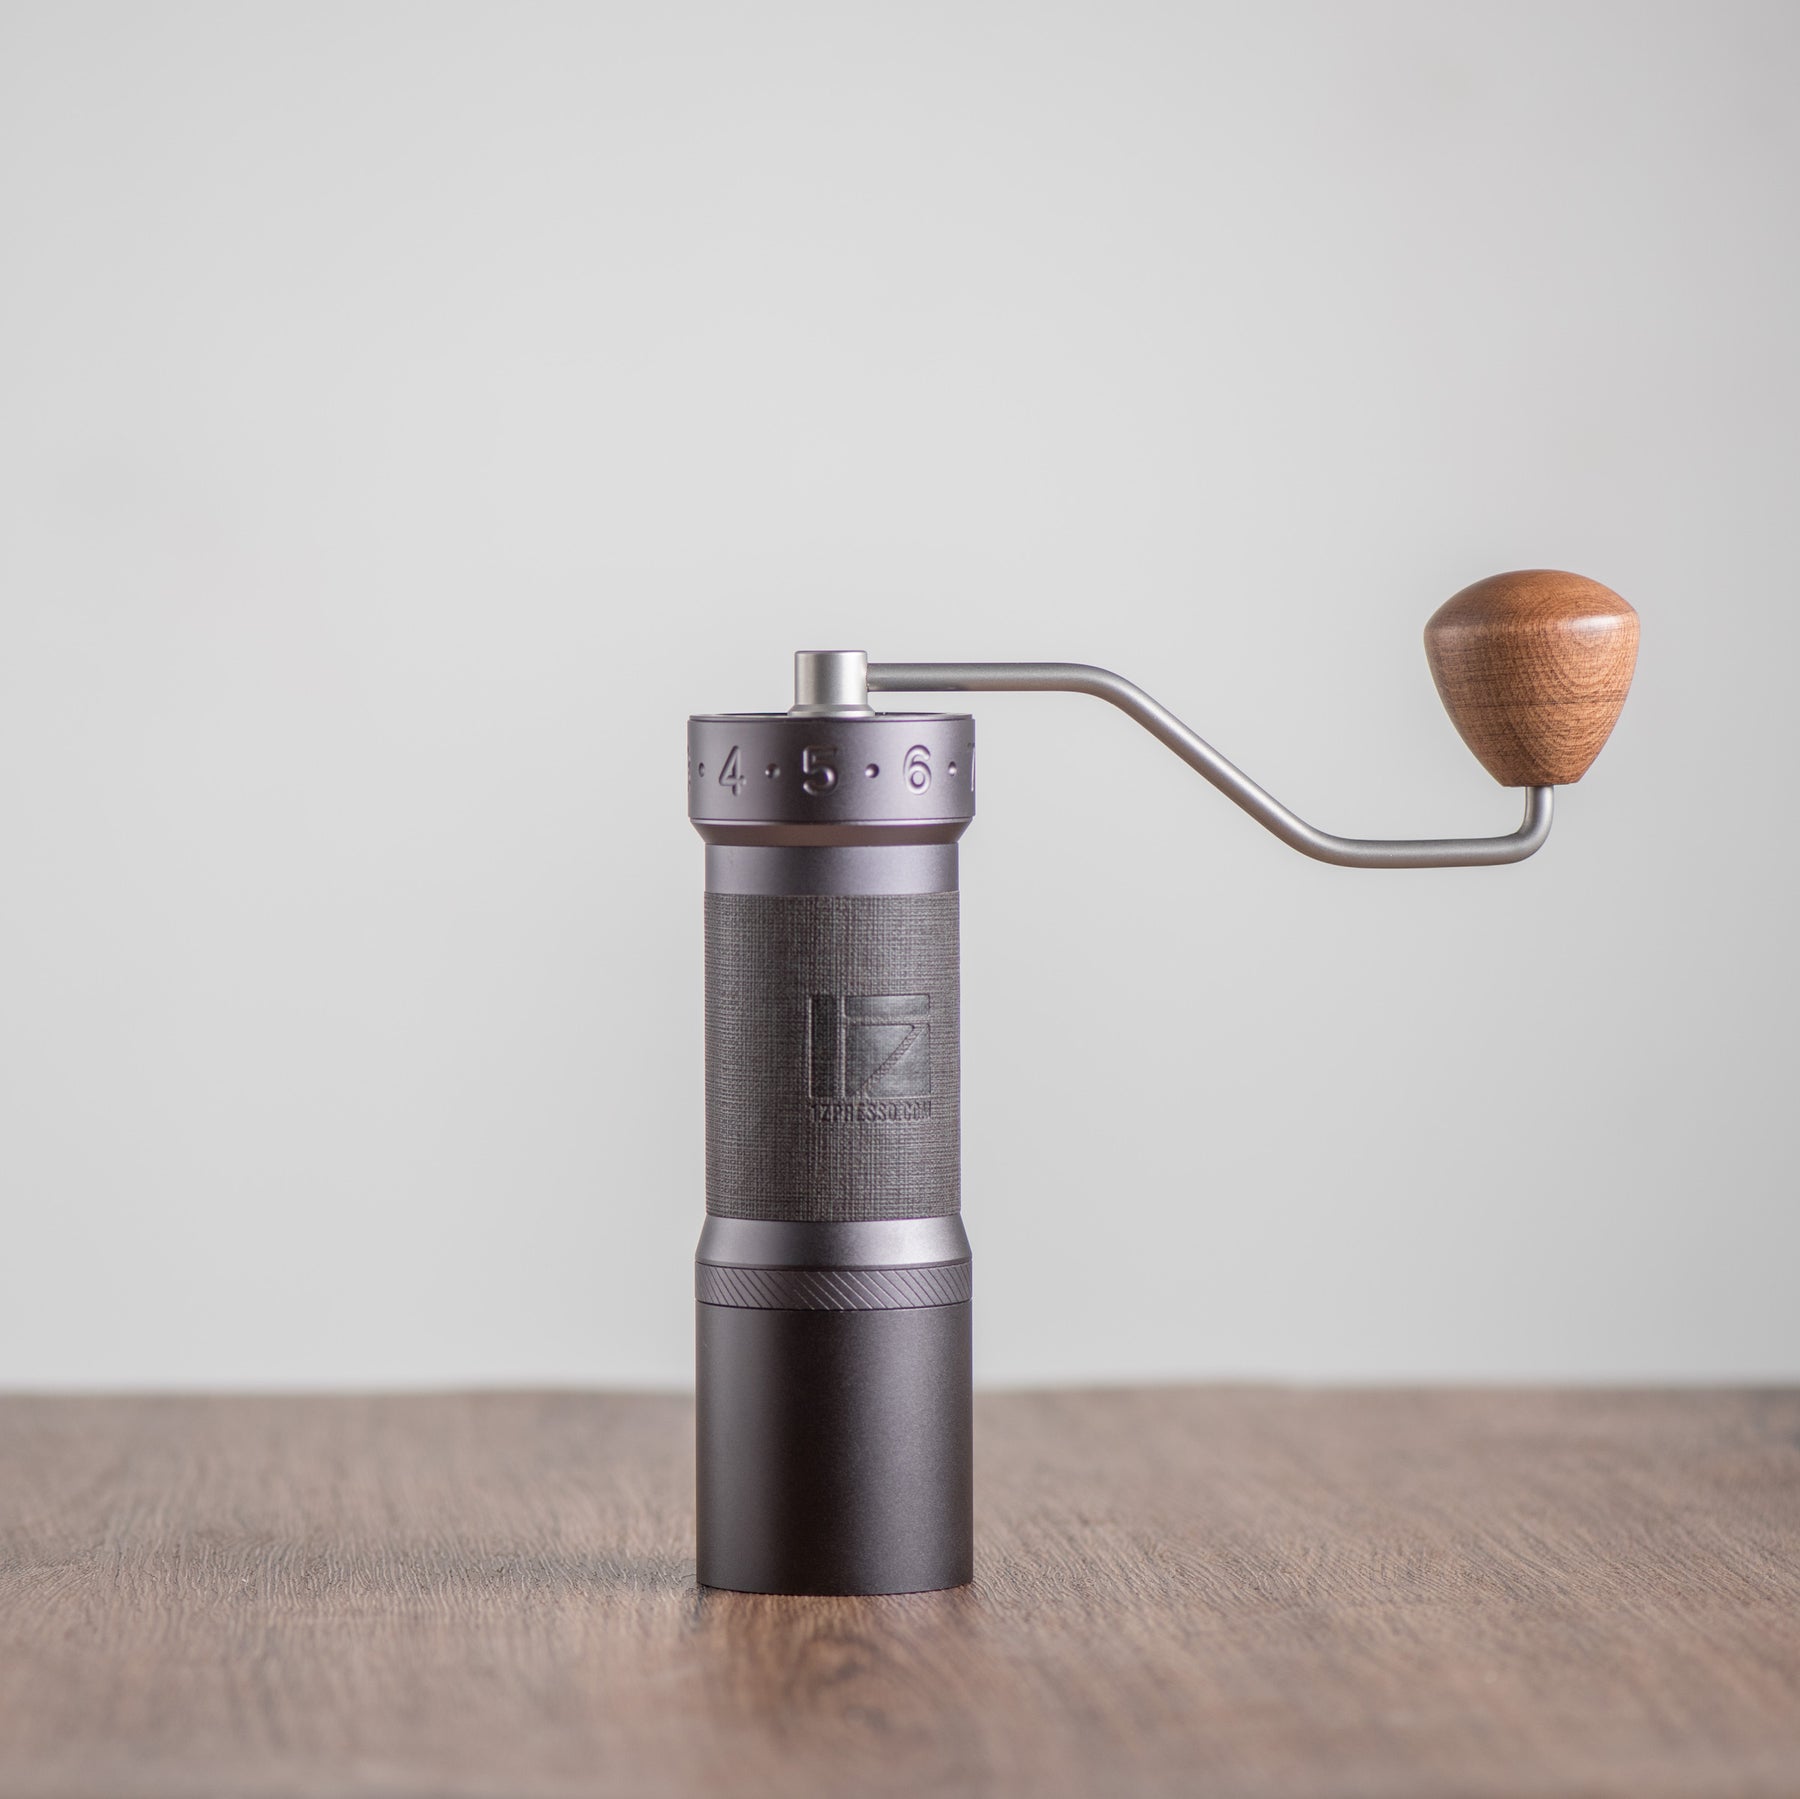 1Zpresso K-Max Manual Coffee Grinder - Iron Grey